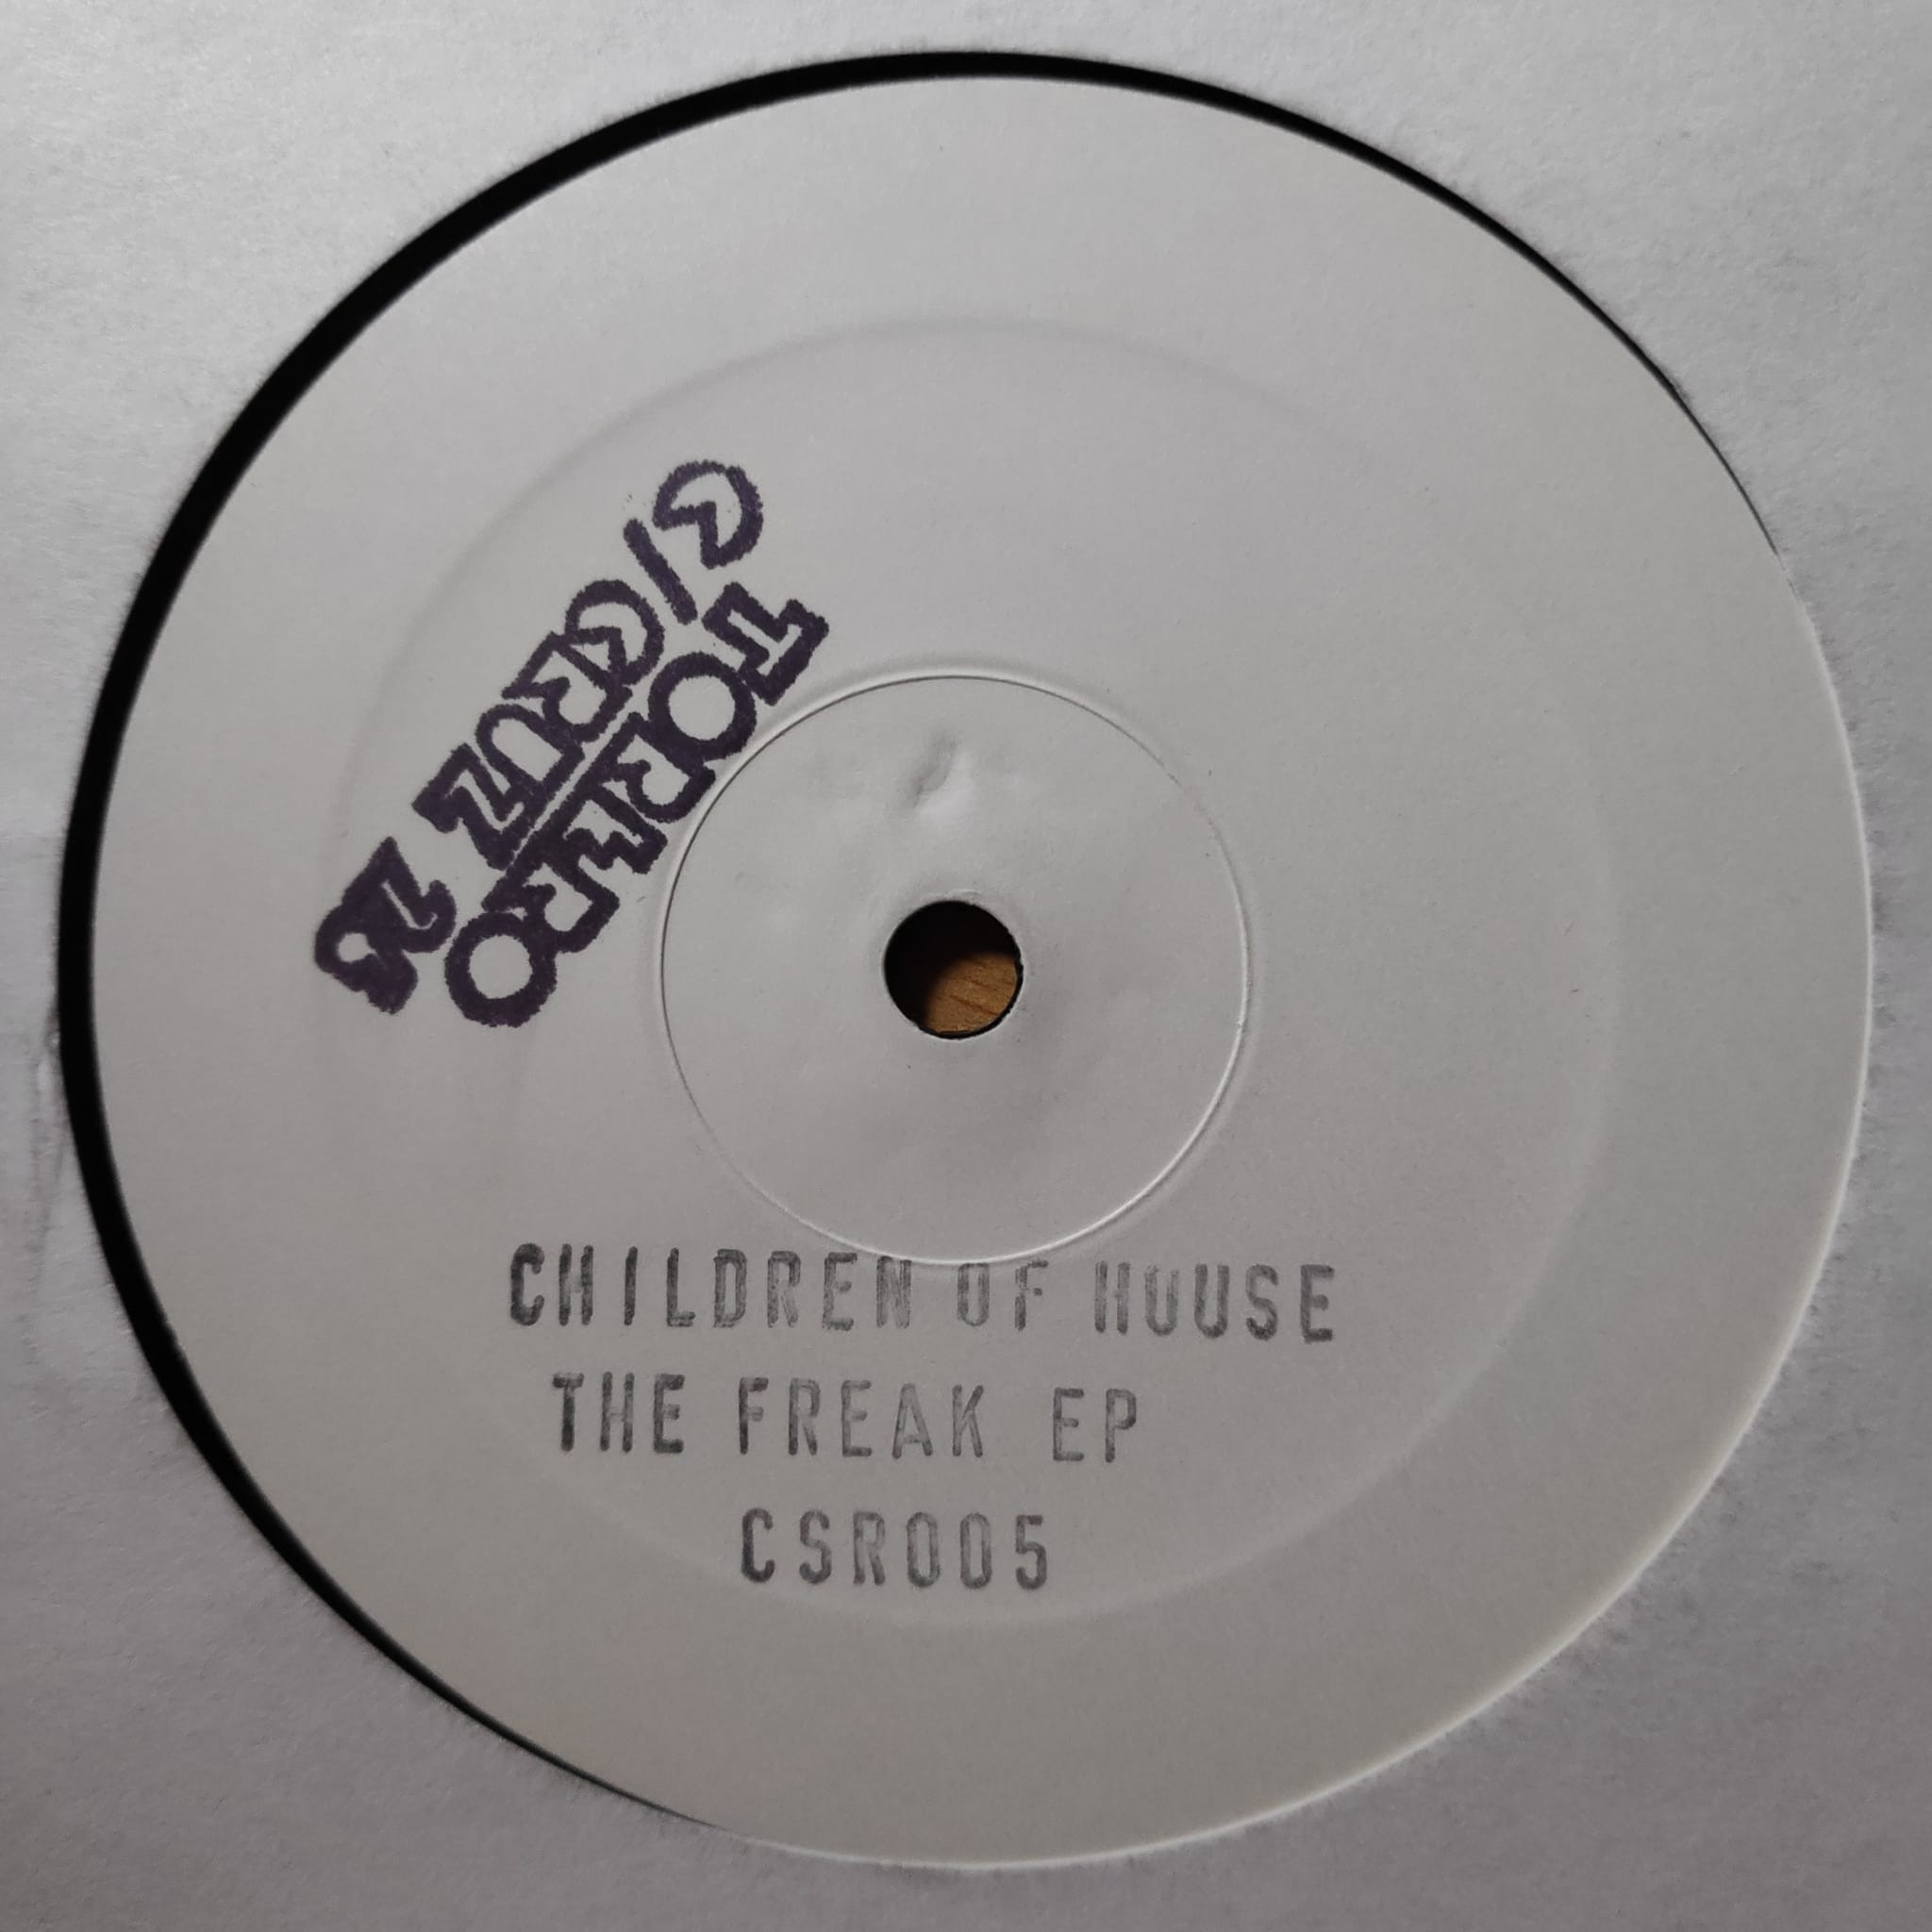 (CUB1995) Children of house - The freak ep